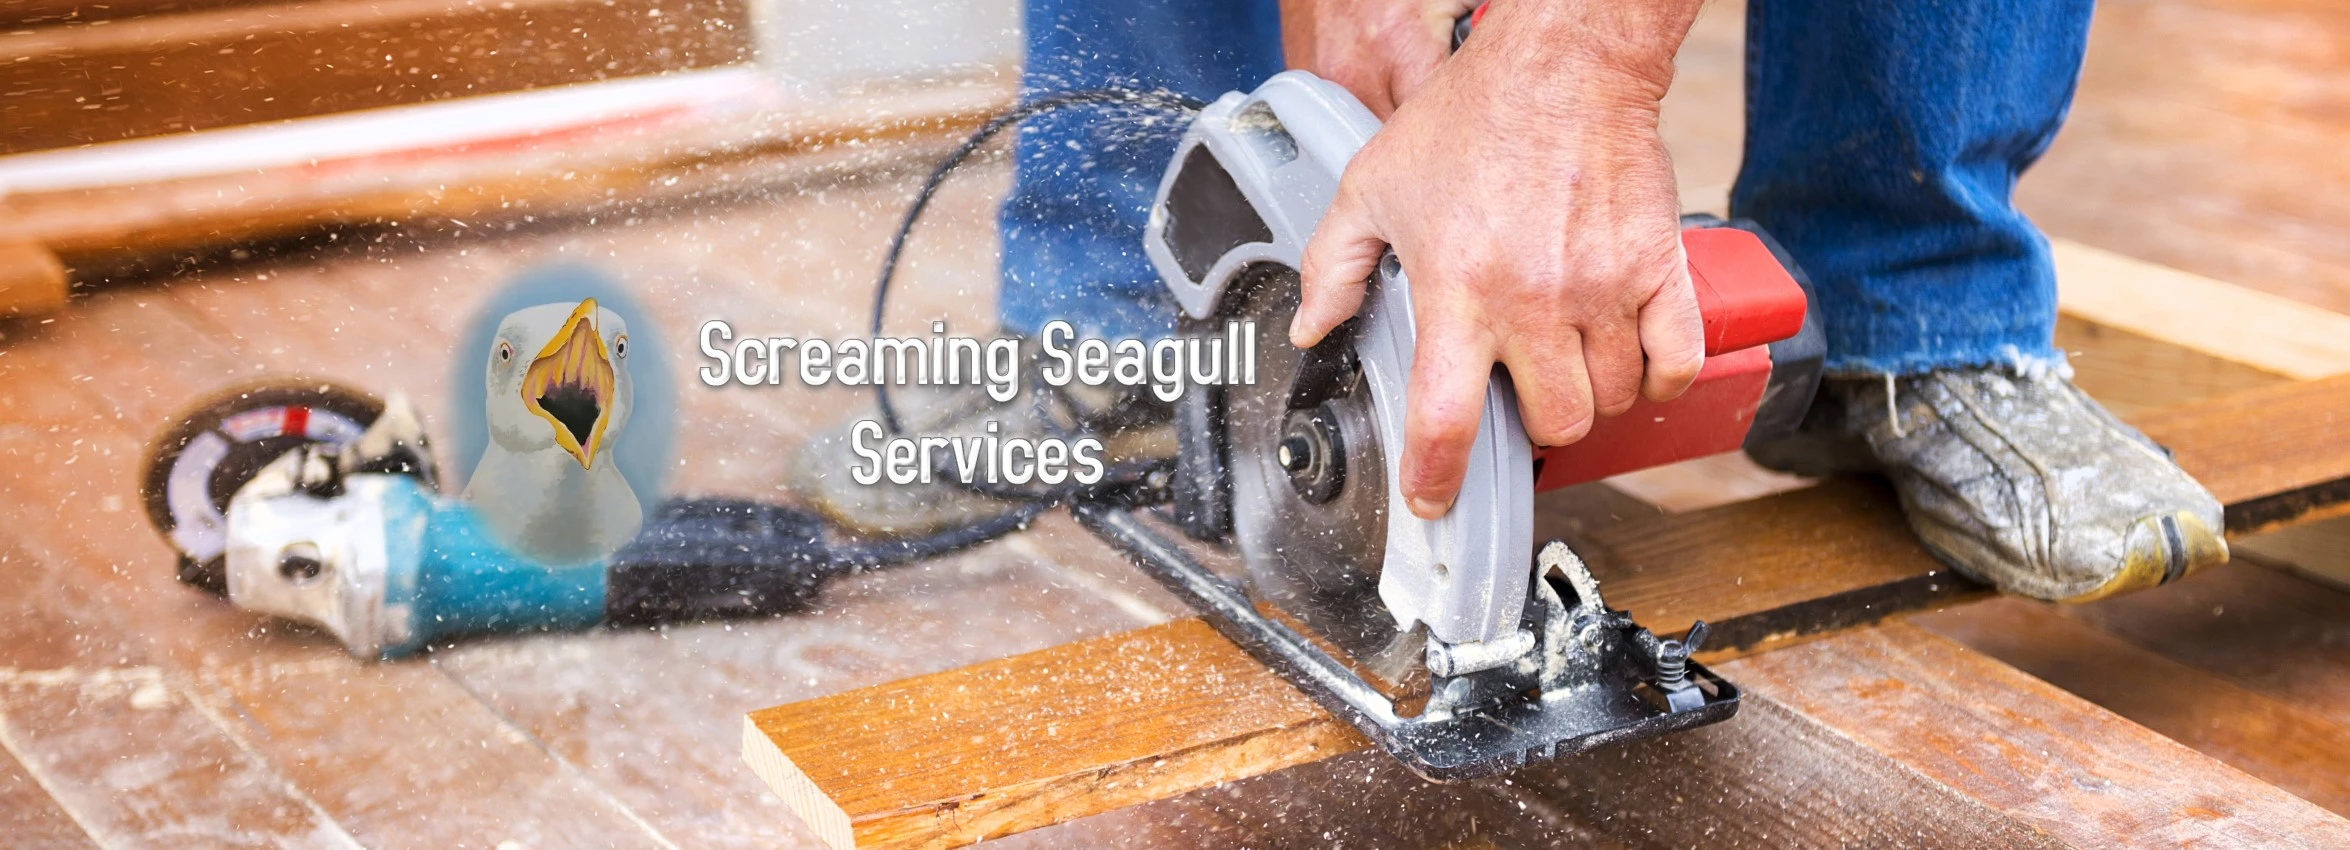 Screaming-Seagull-Services_Desktop_ET